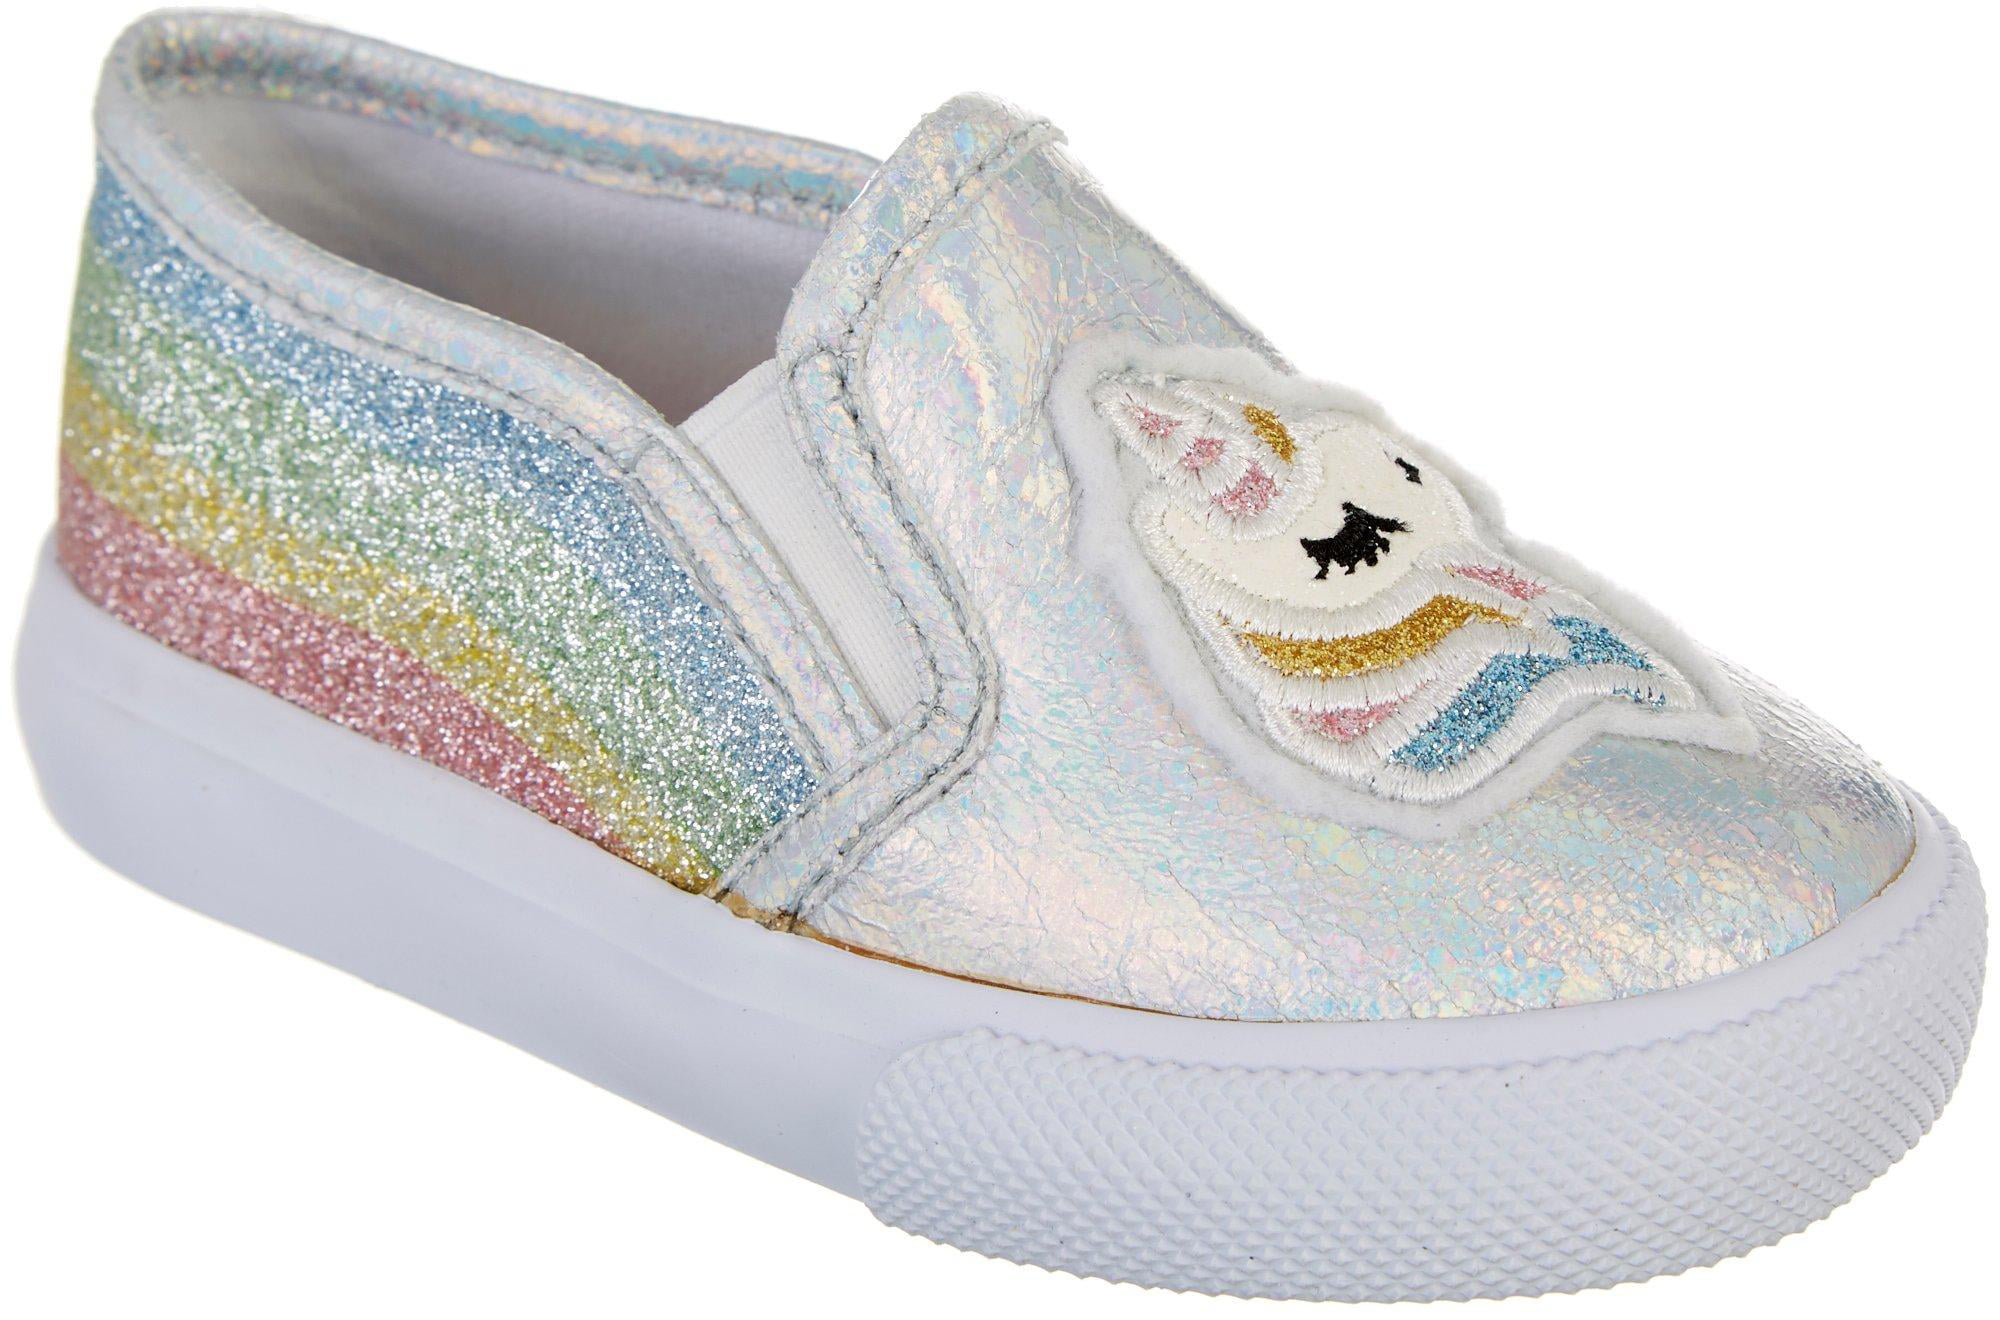 Legendary Laces Toddler Girls Harper Slip On Shoes - Walmart.com ...